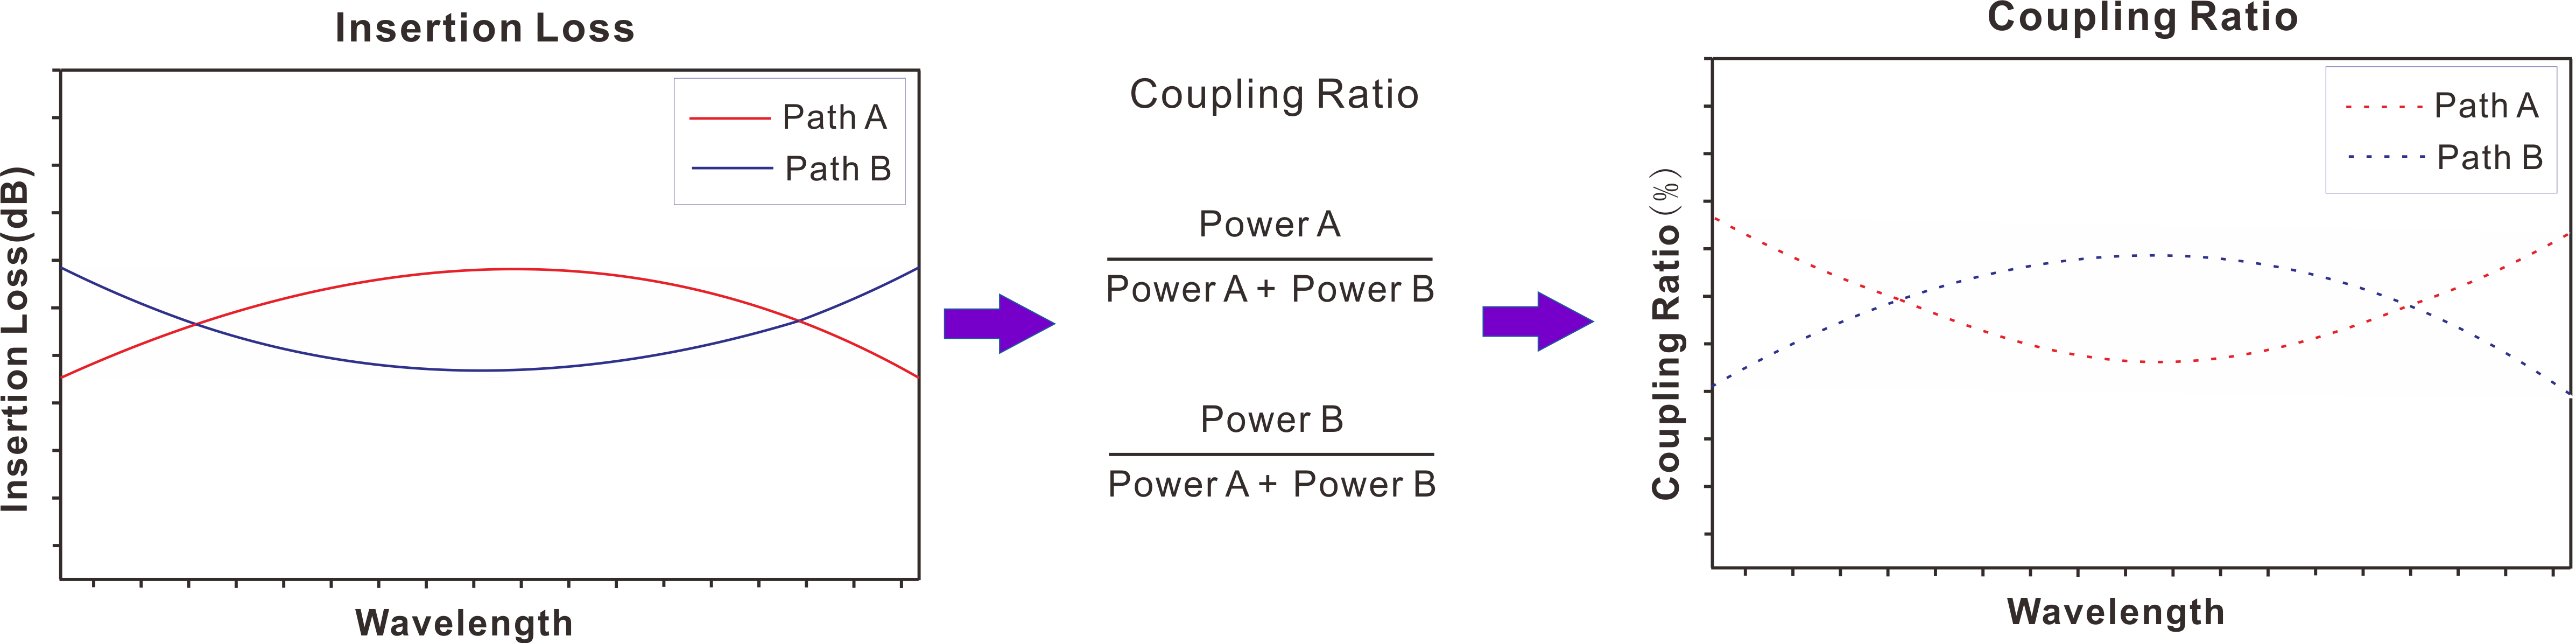 Coupling Ratio in fiber coupler